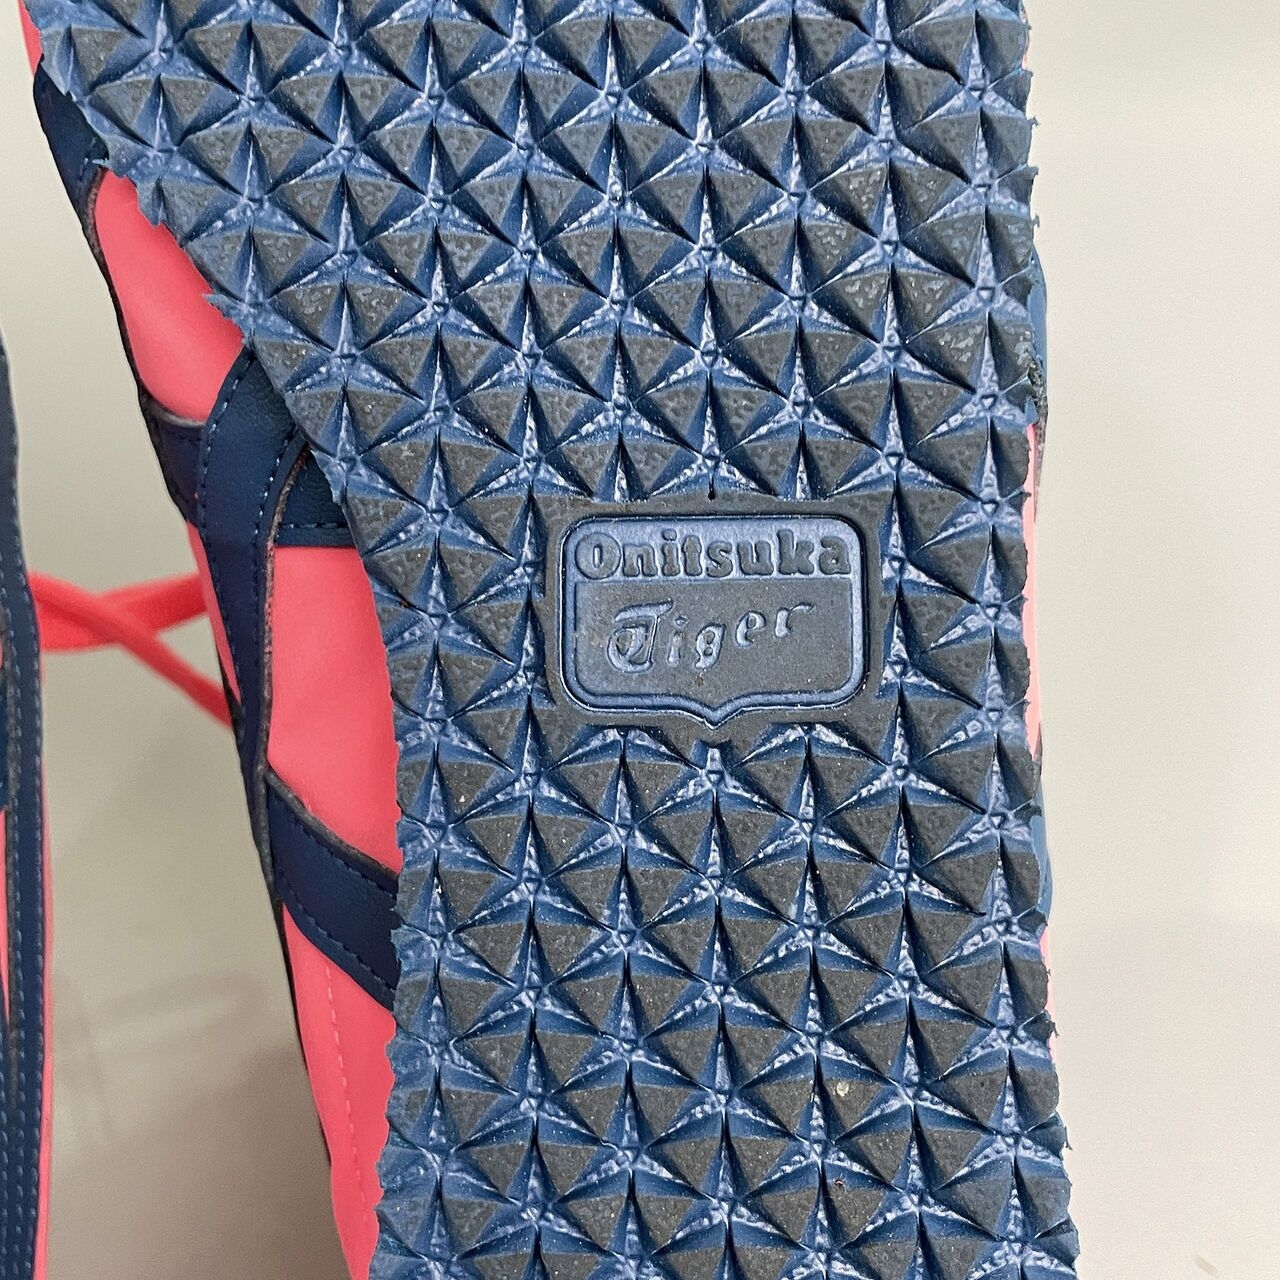 Onitsuka Tiger Pink Cameo/Maco Blue Mexico 66 Sneakers